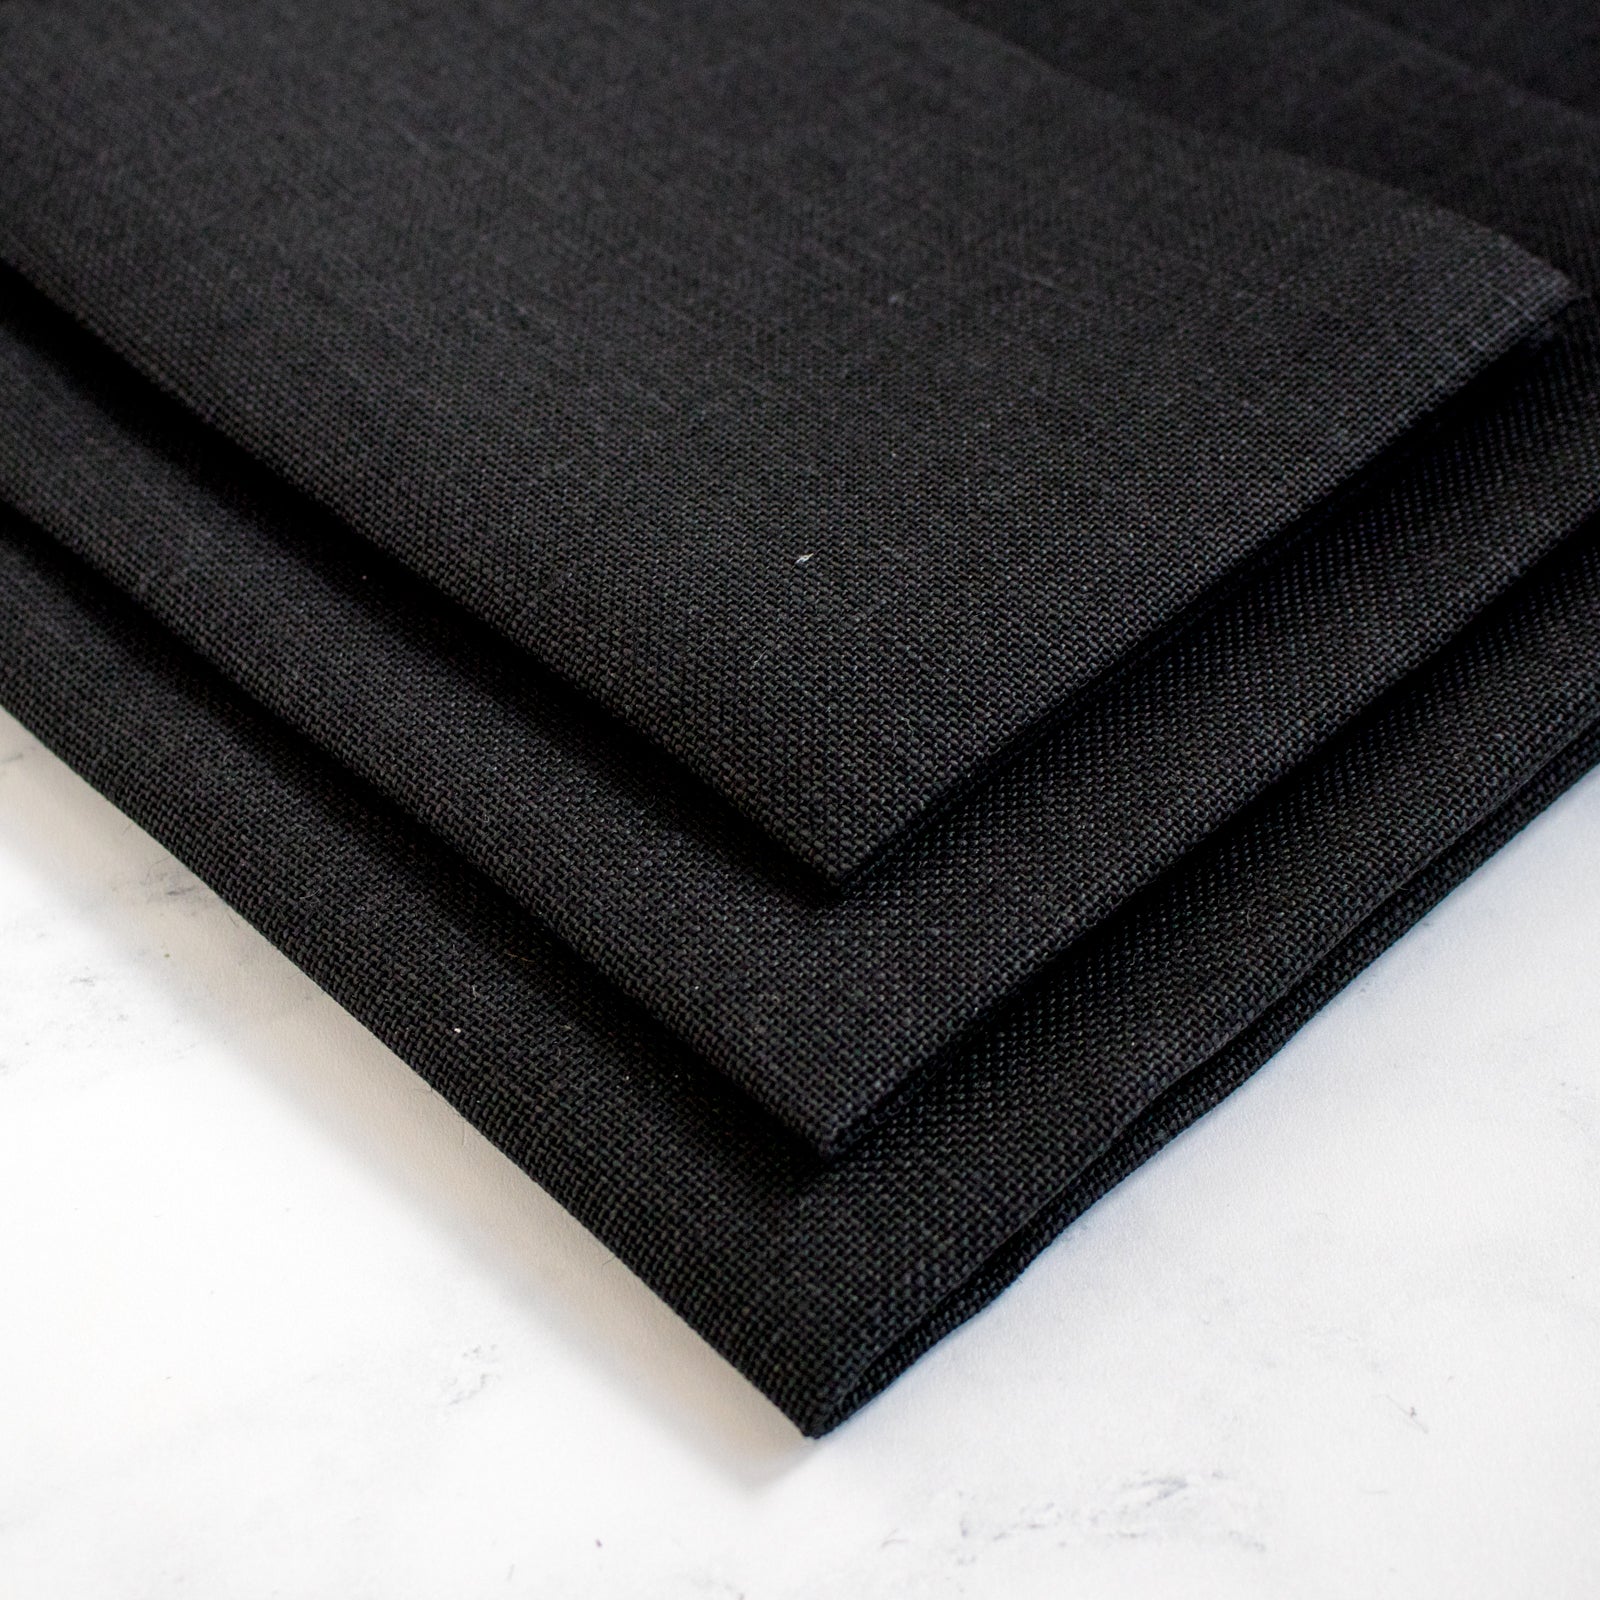 Linen Cross Stitch Fabric 28 count in BLACK - Magic Hour Needlecrafts